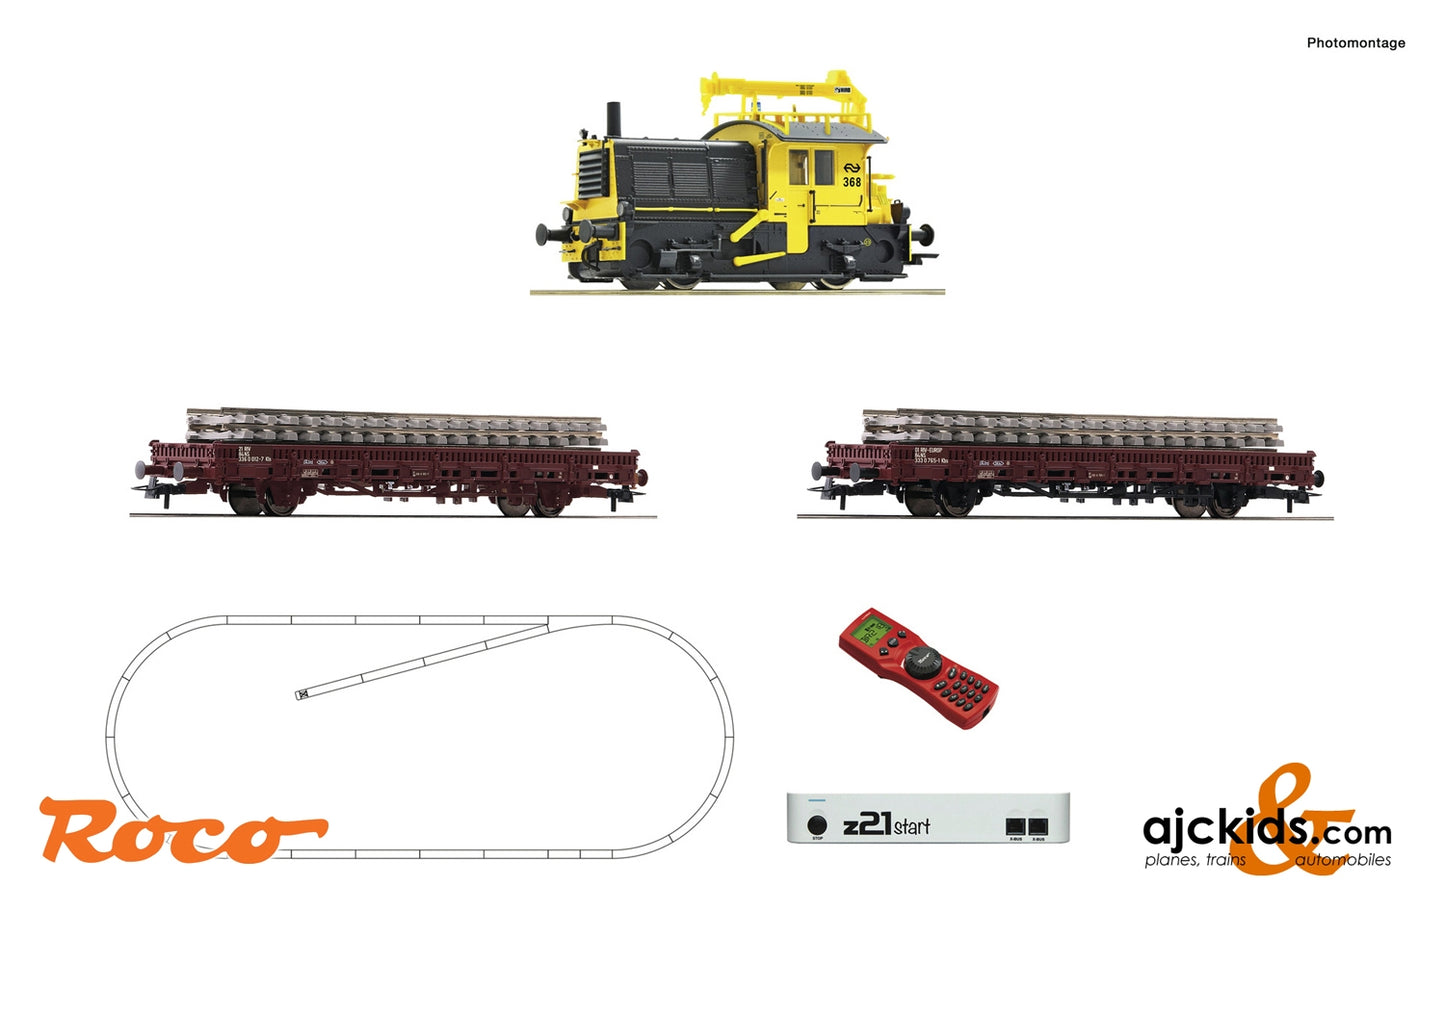 Roco 51333 - z21 start digital set: Diesel locomotive “Sik” with track maintenance train